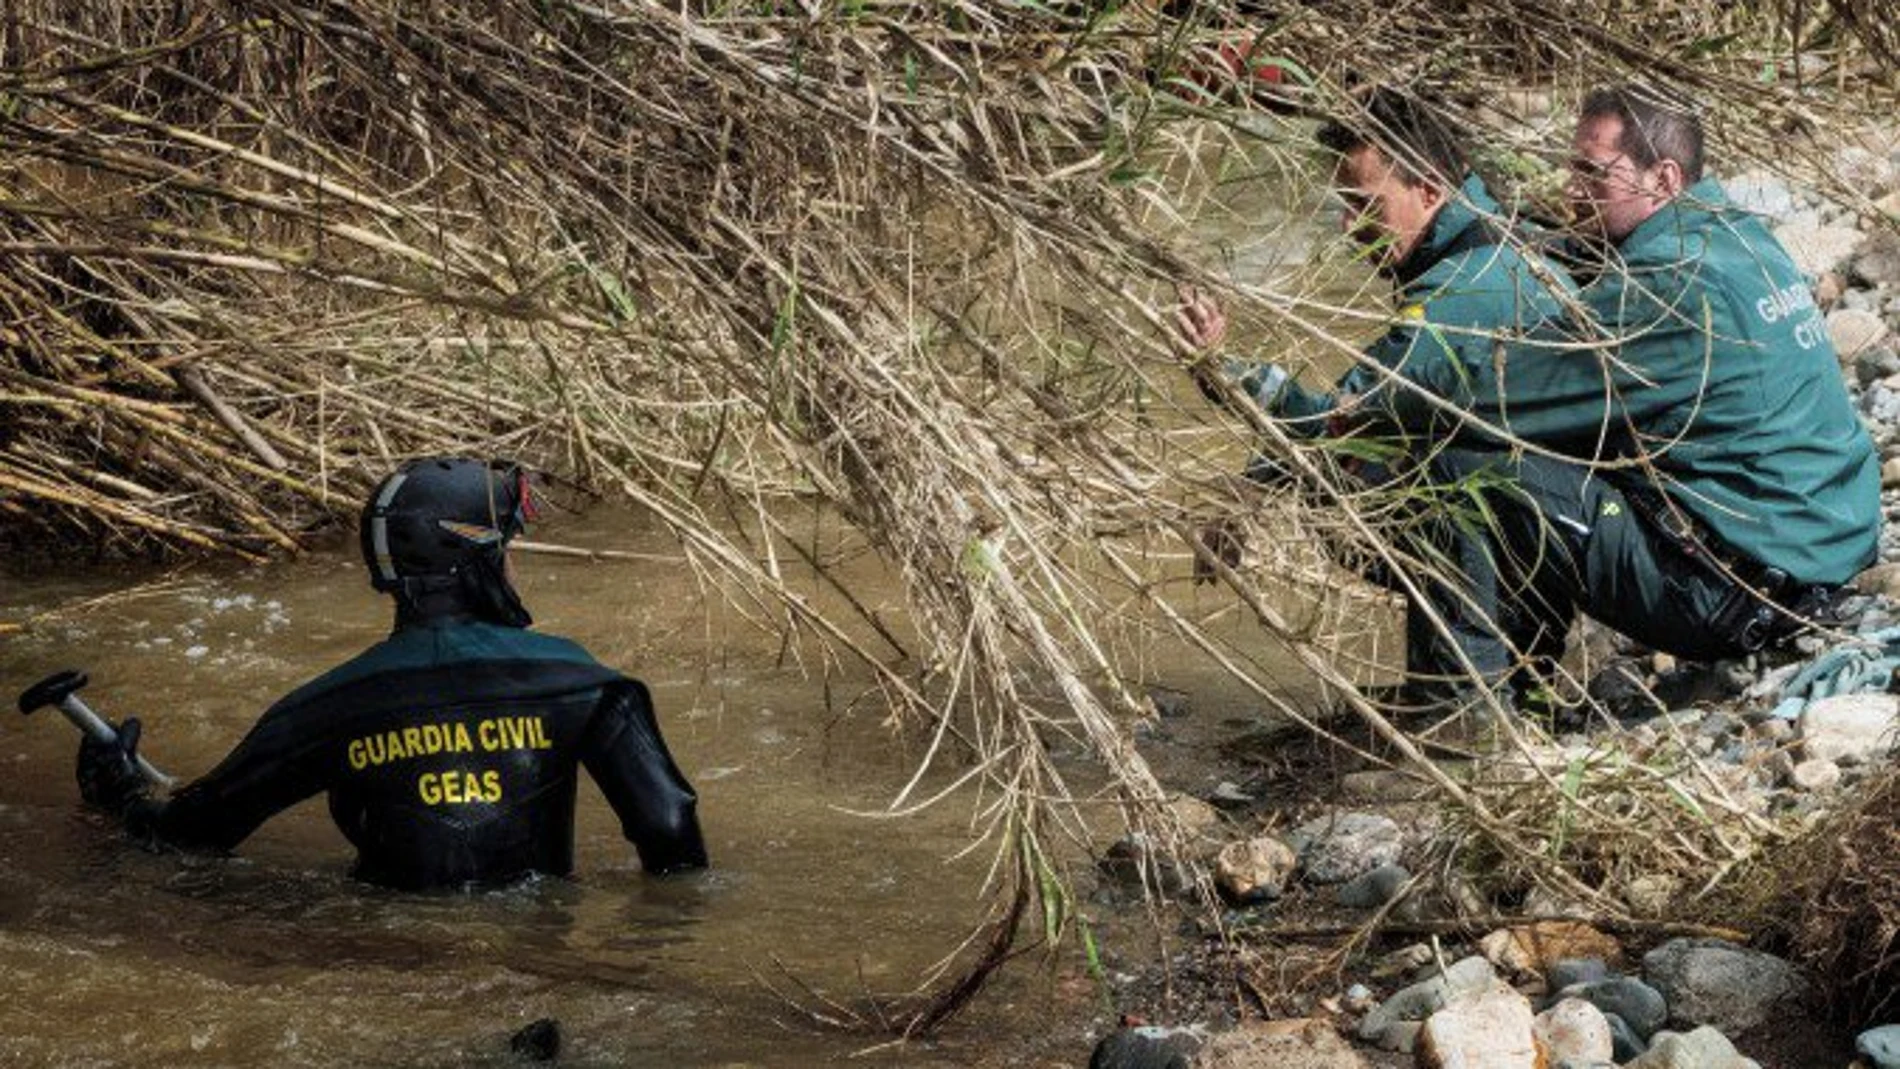 Se reanuda la búsqueda del guardia civil desaparecido en Guillena